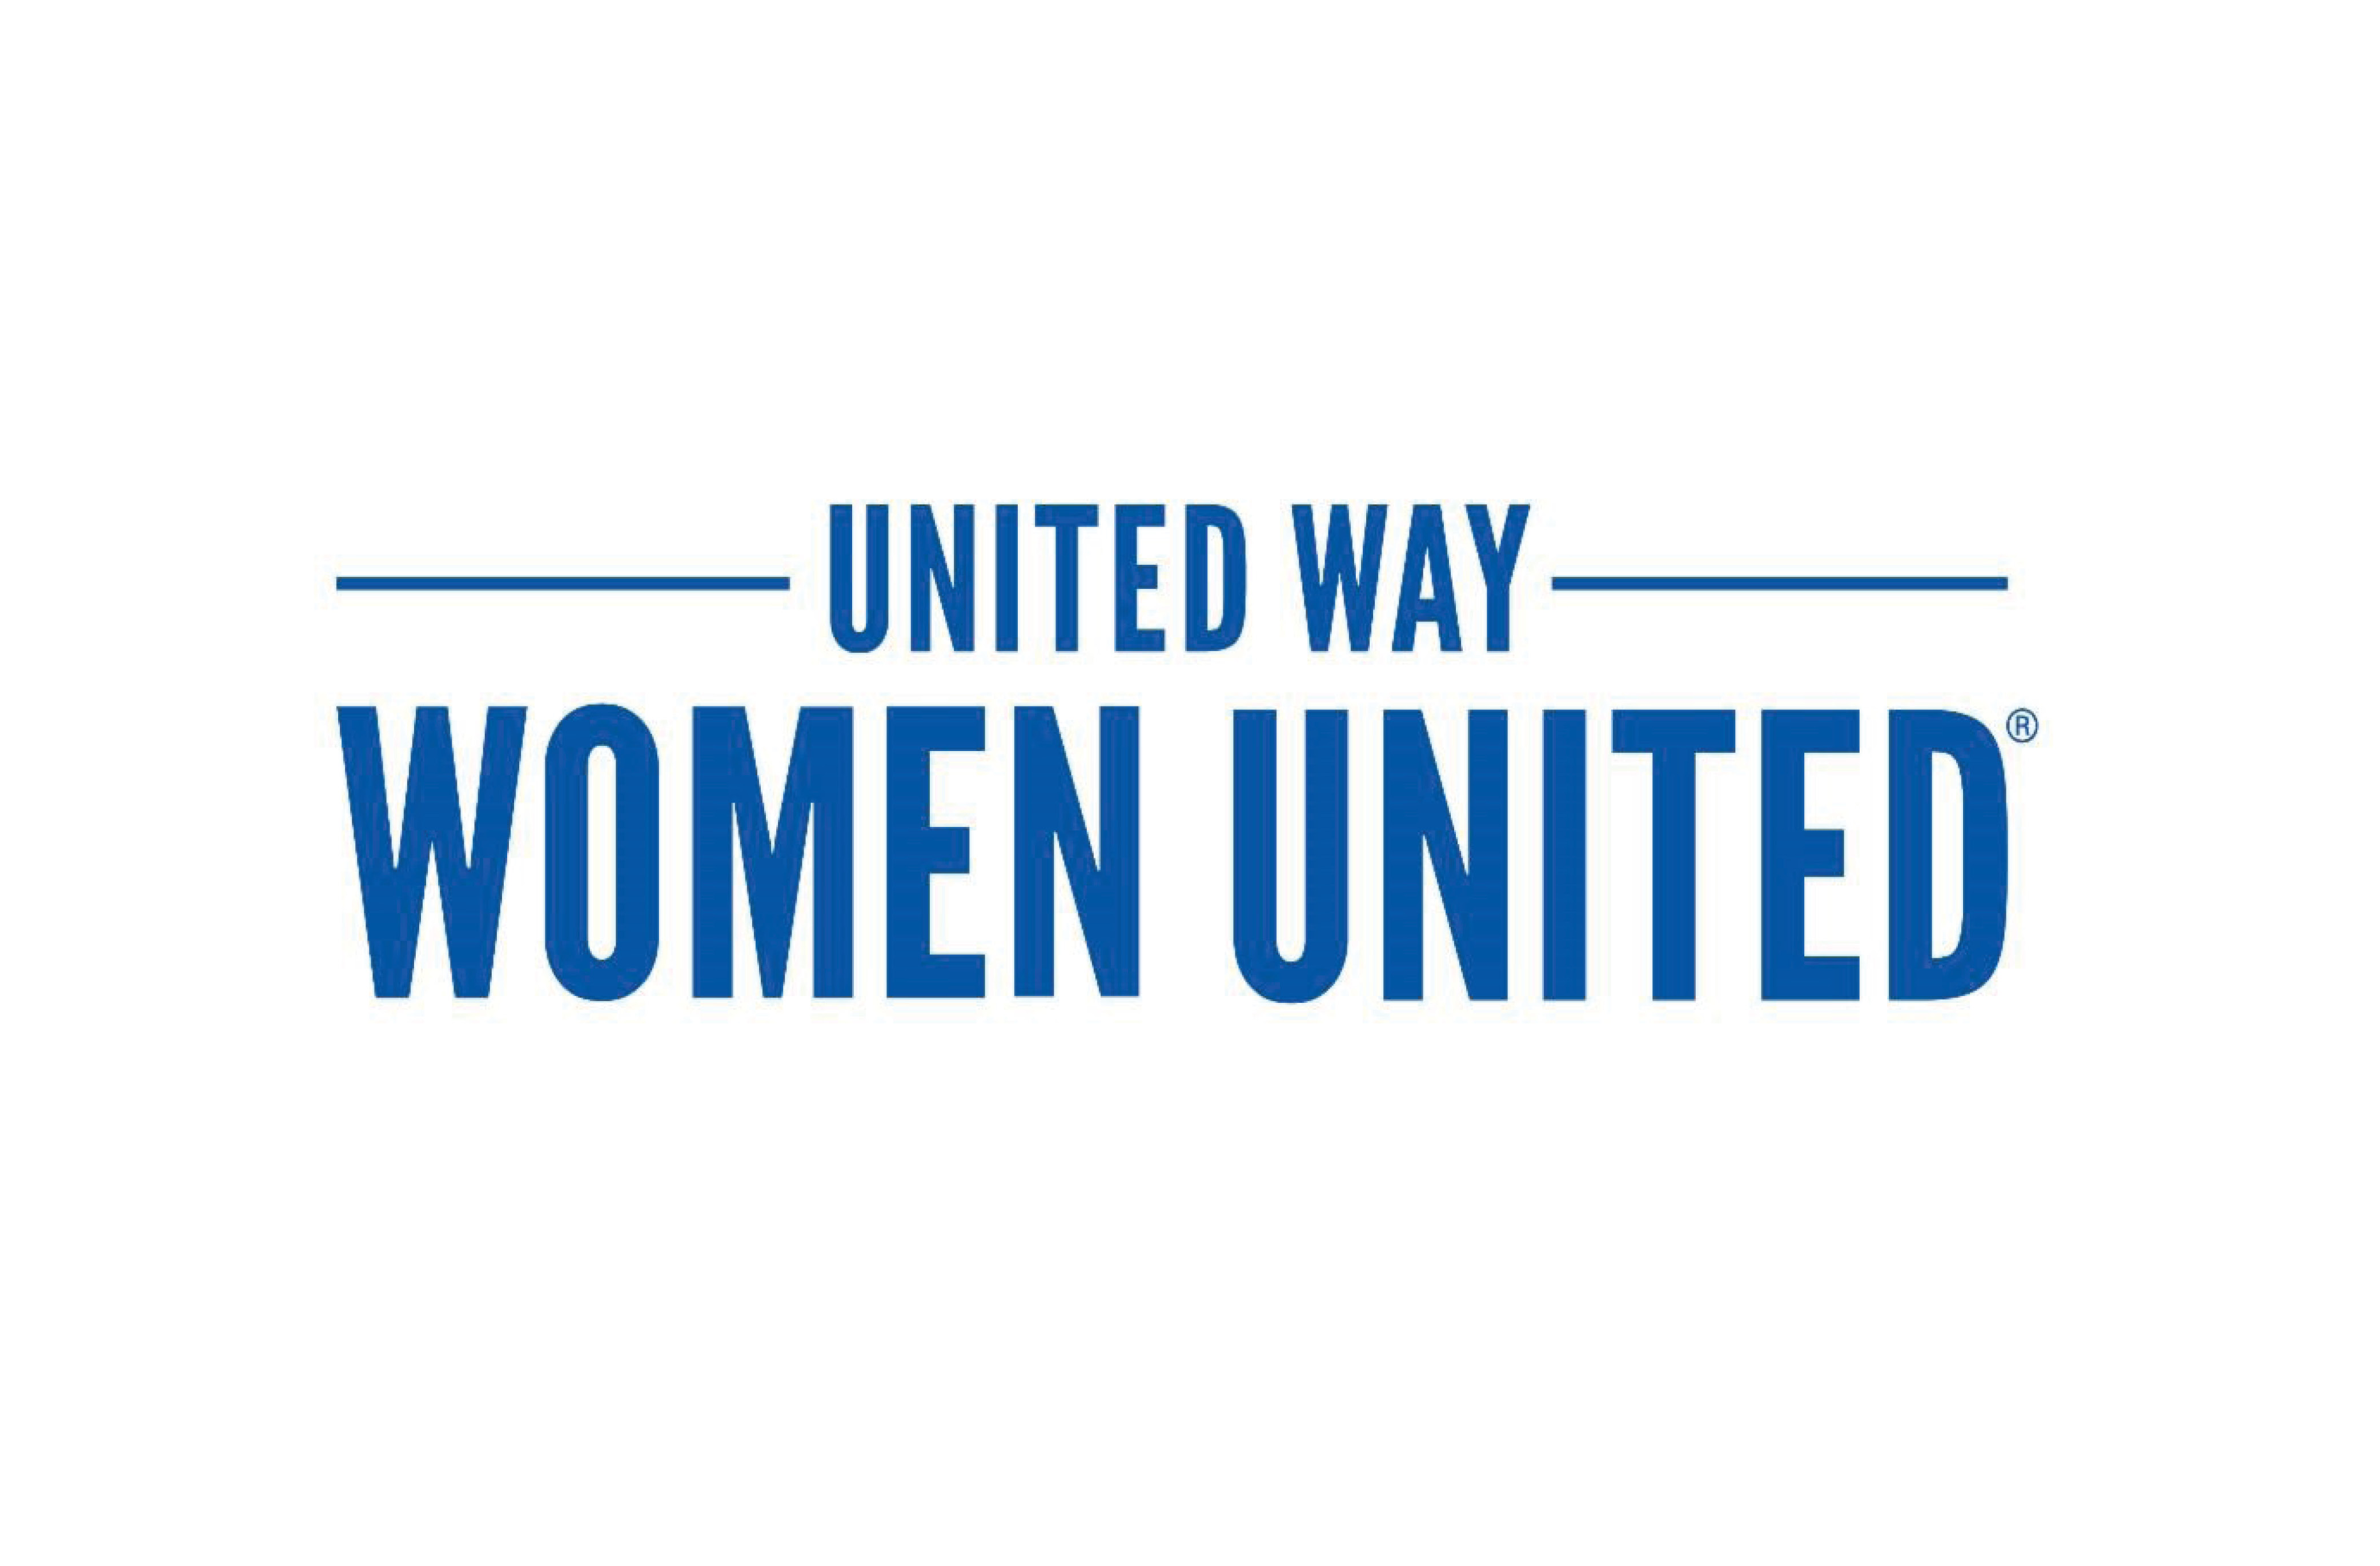 United Way - Women United graphic